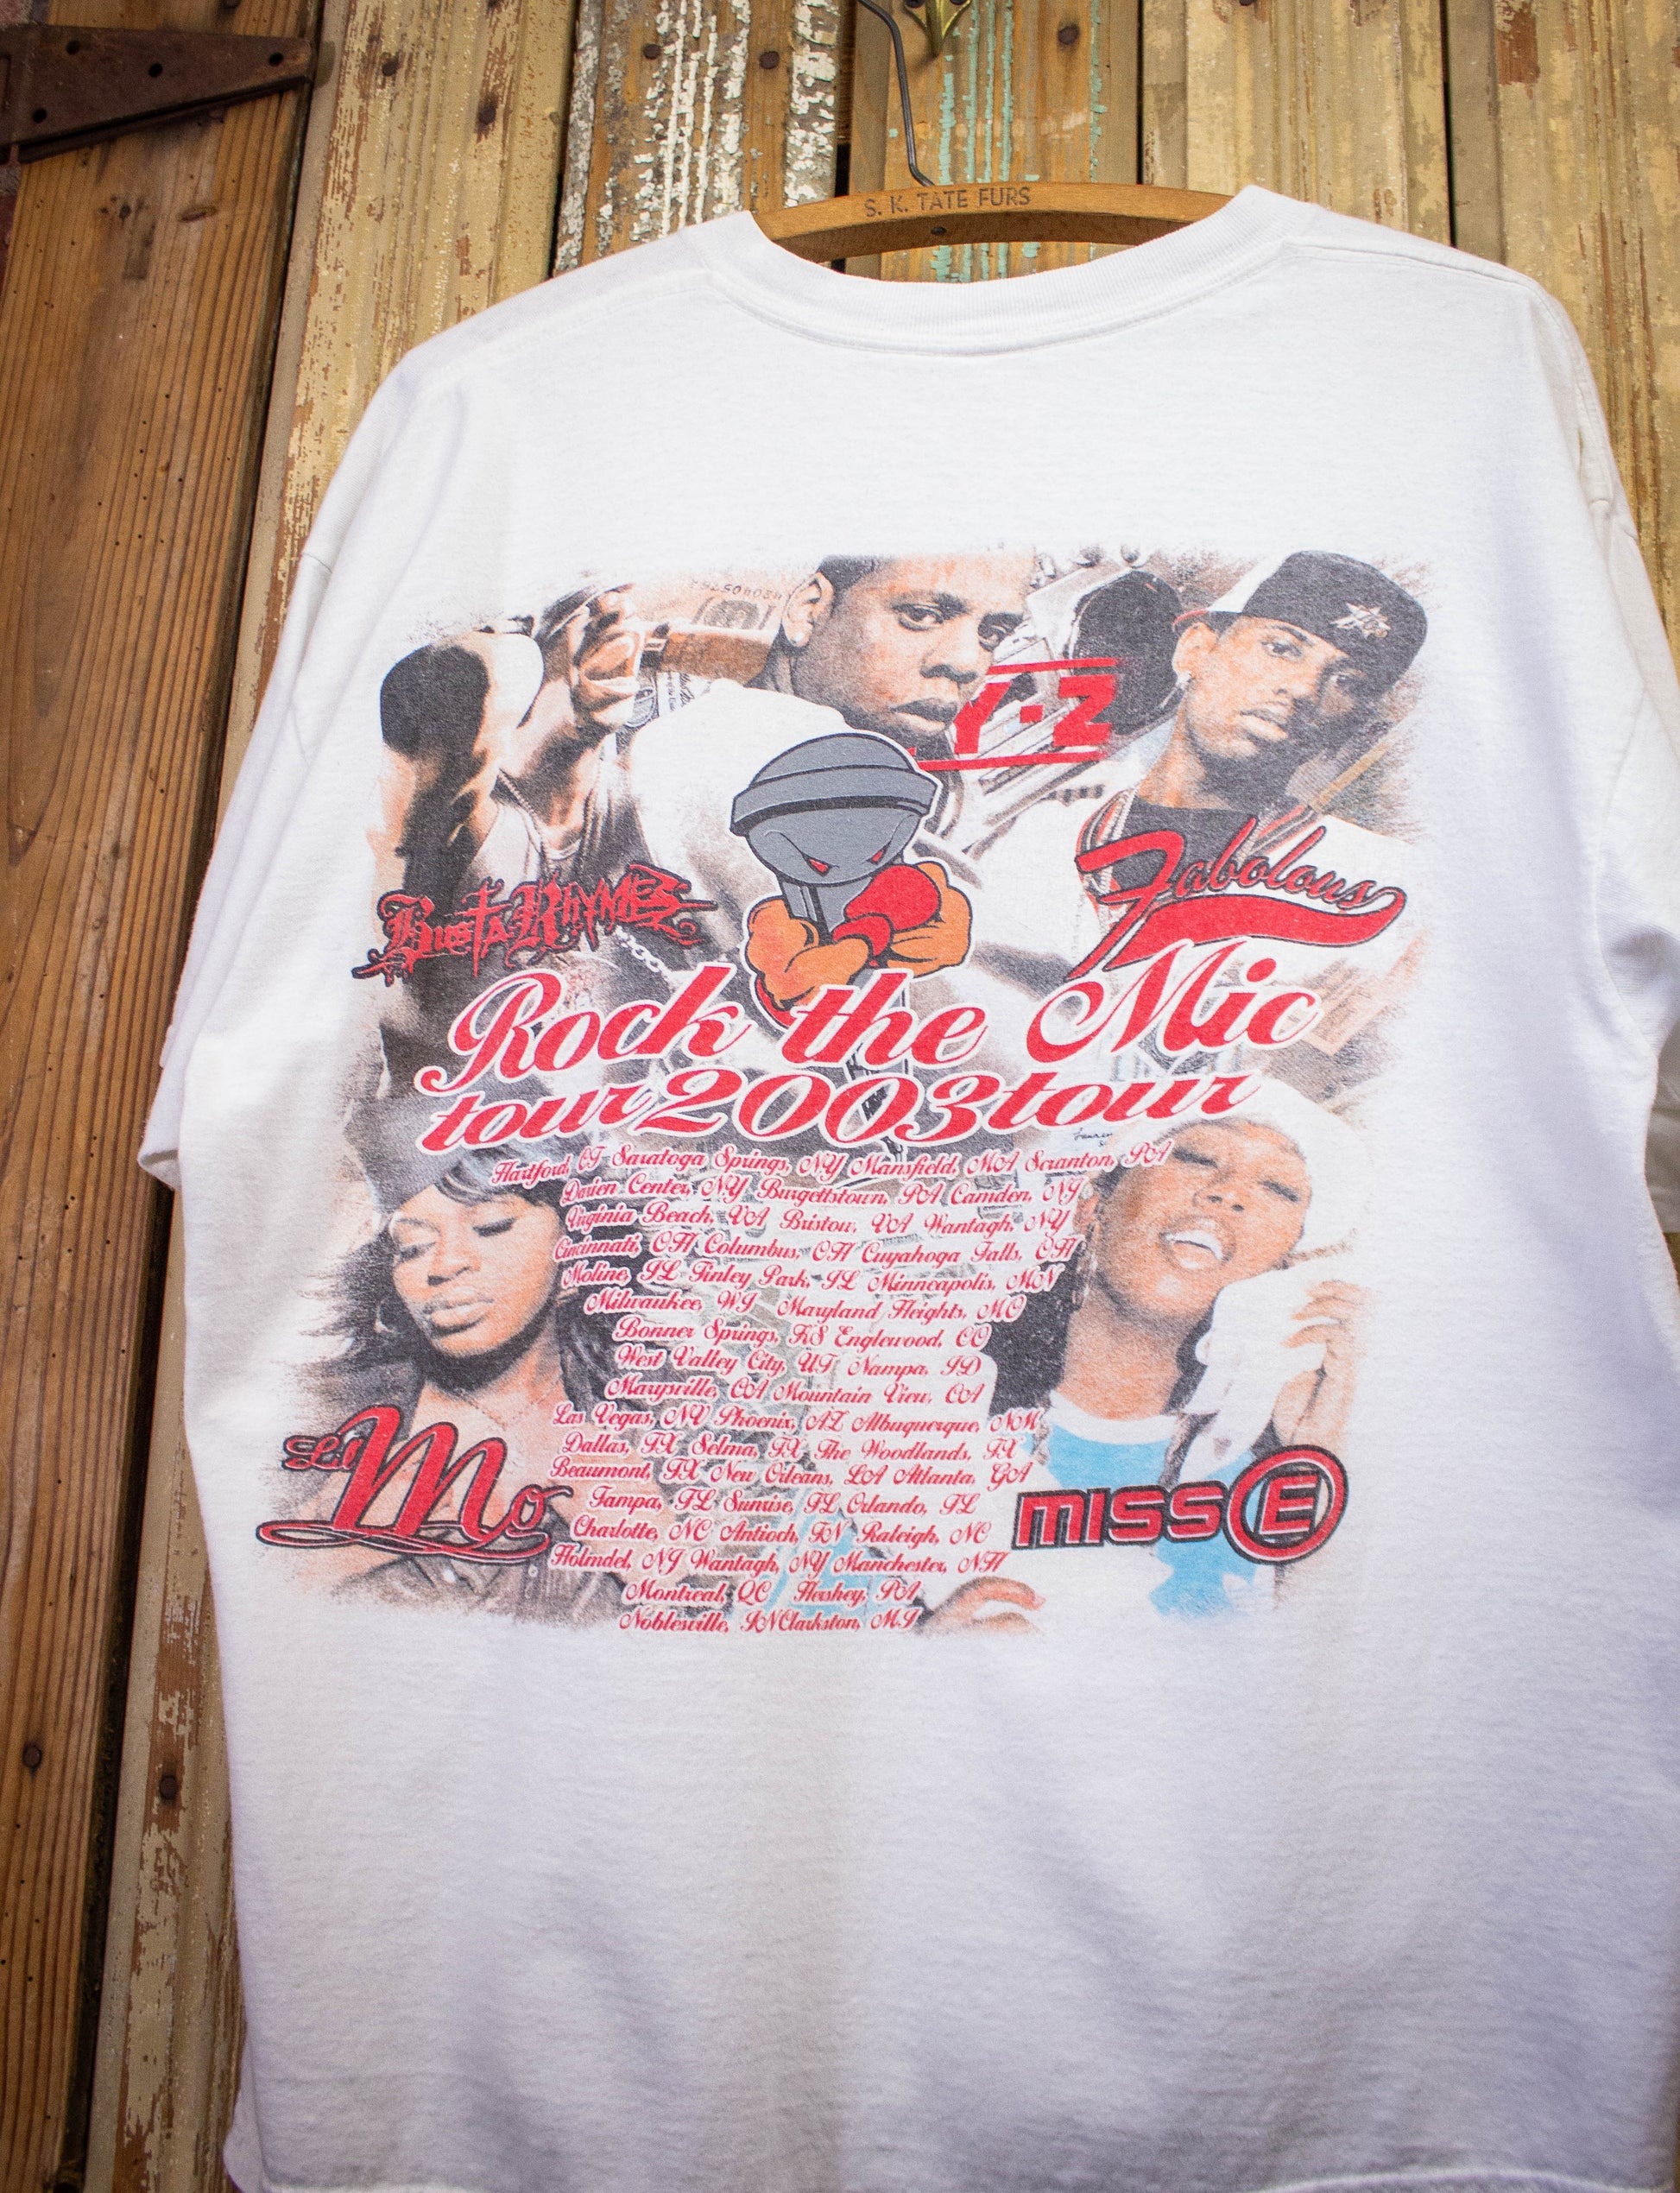 Vintage Jay Z 50 Cent Rock The Mic Rap T Shirt 2003 White XL